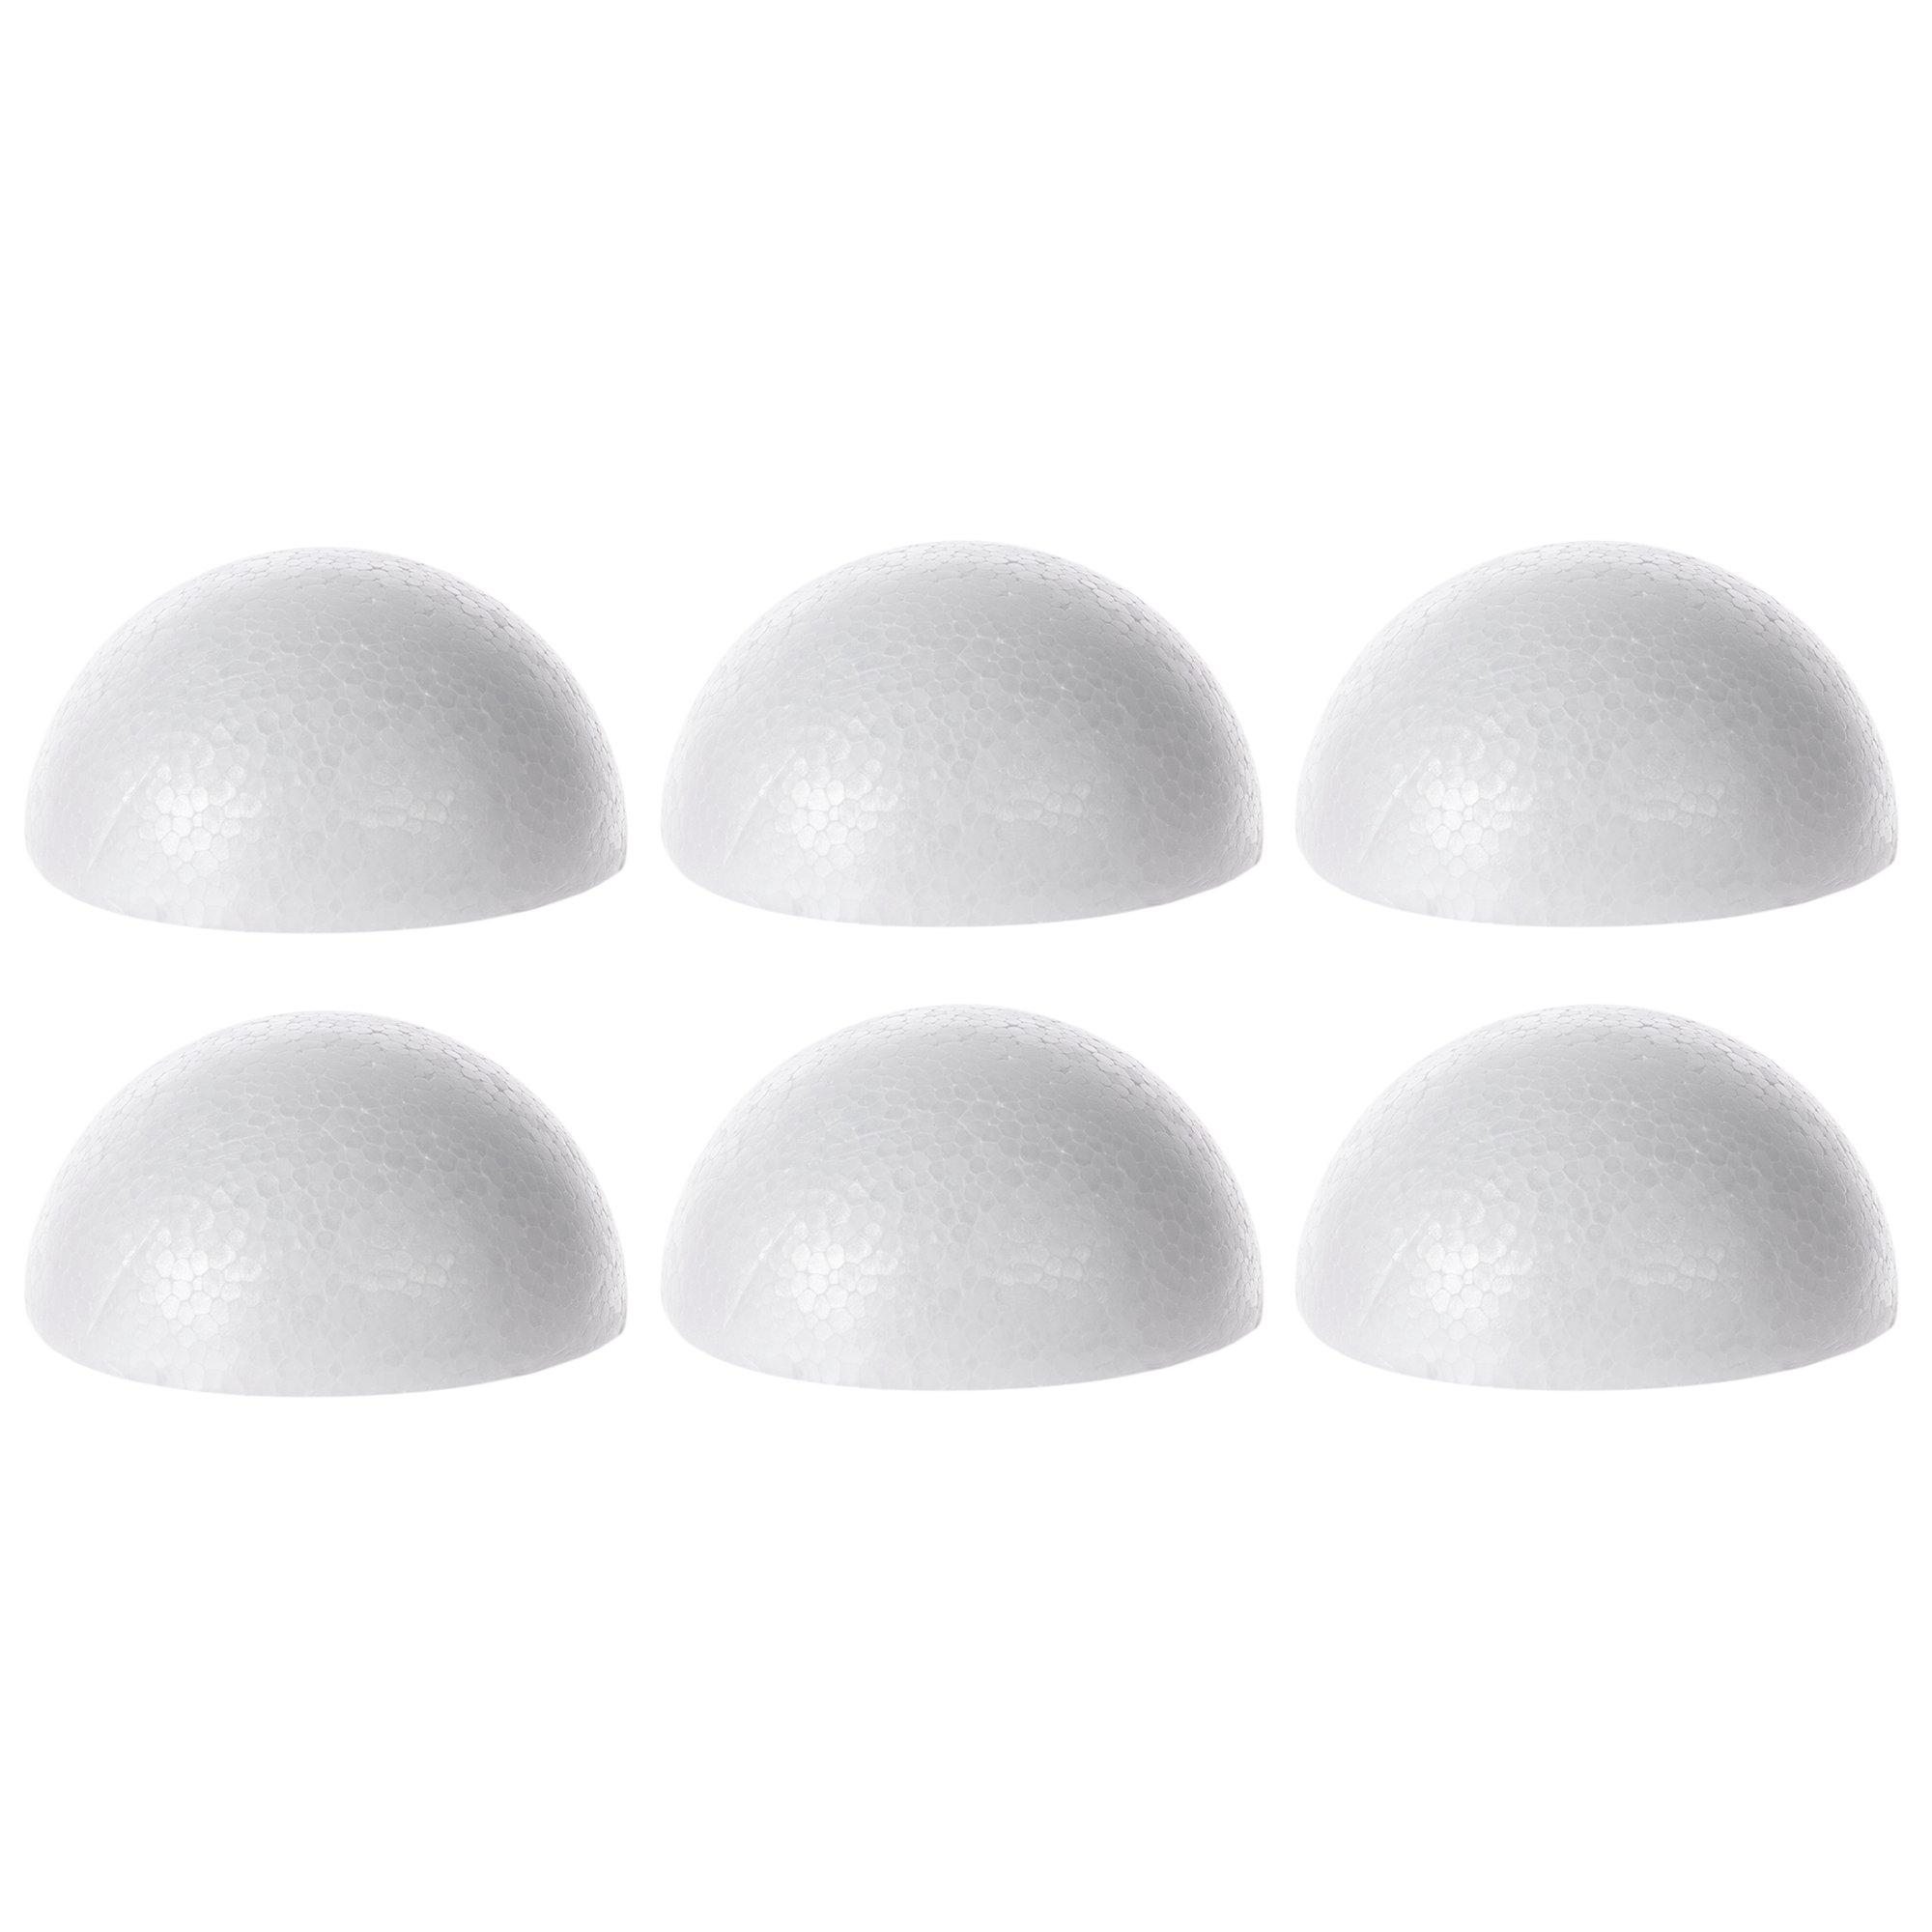 Floracraft Smooth Styrofoam Balls 3 6/Pkg